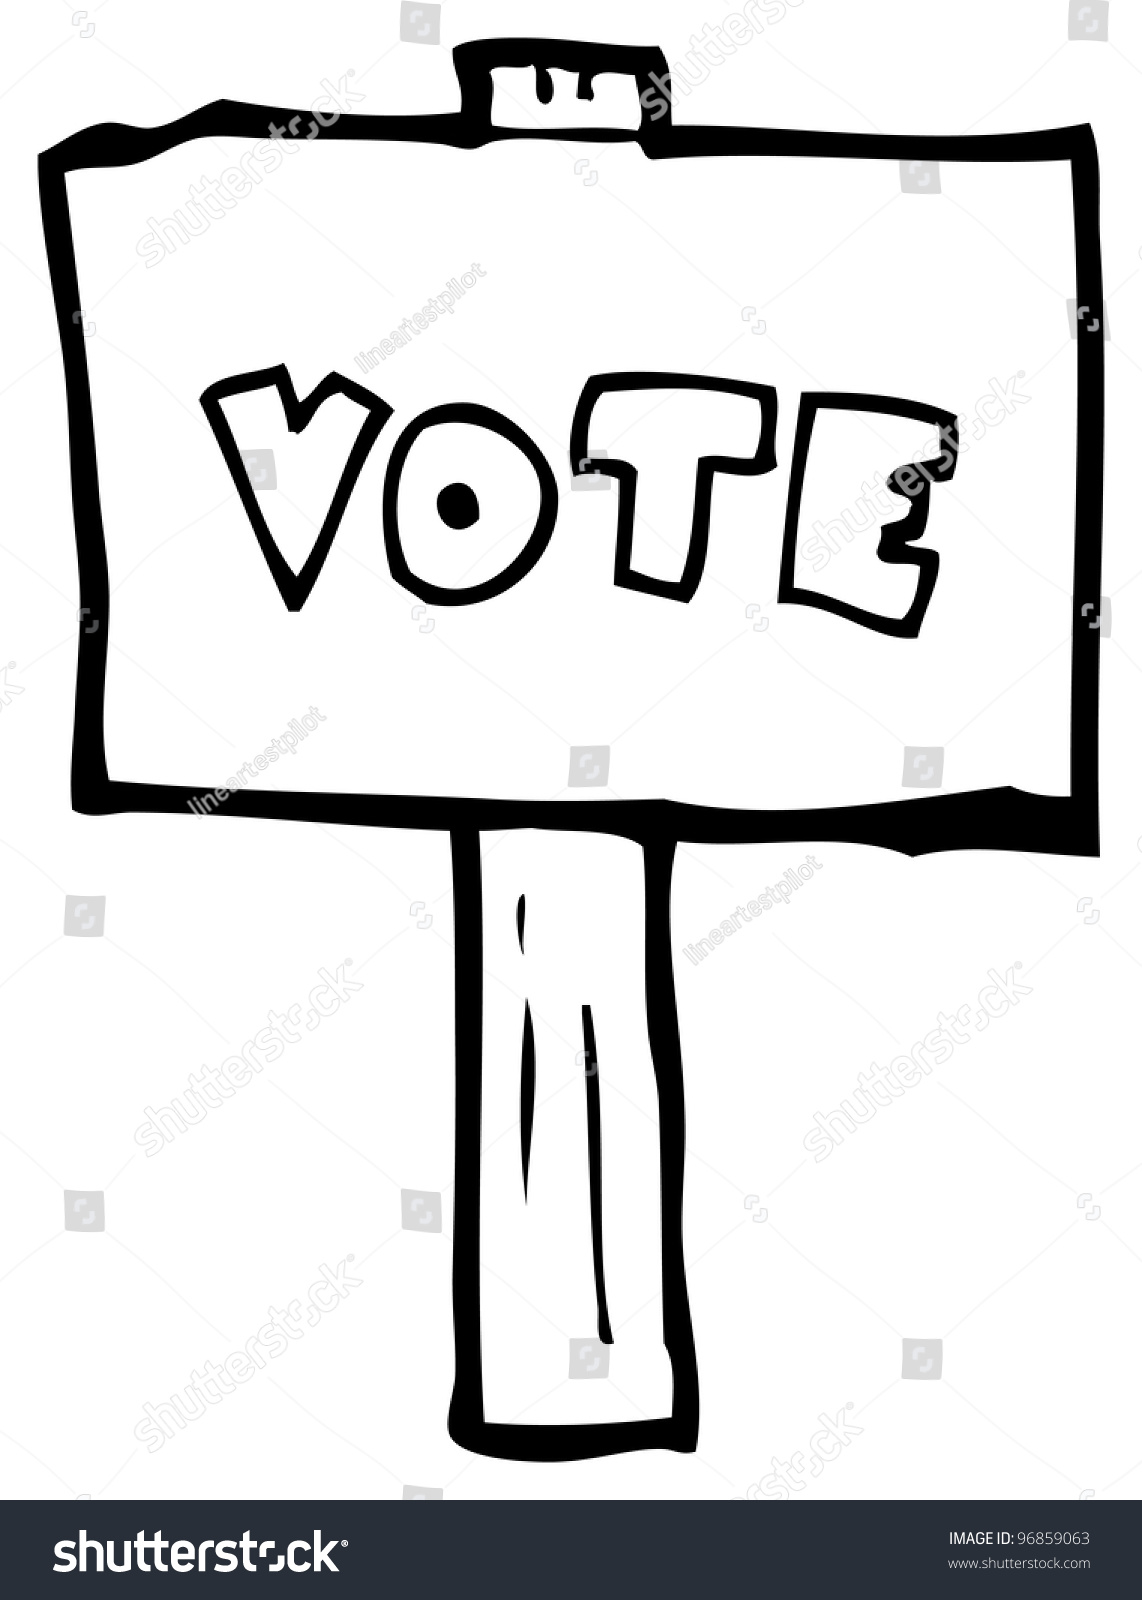 vote sign clip art - photo #23